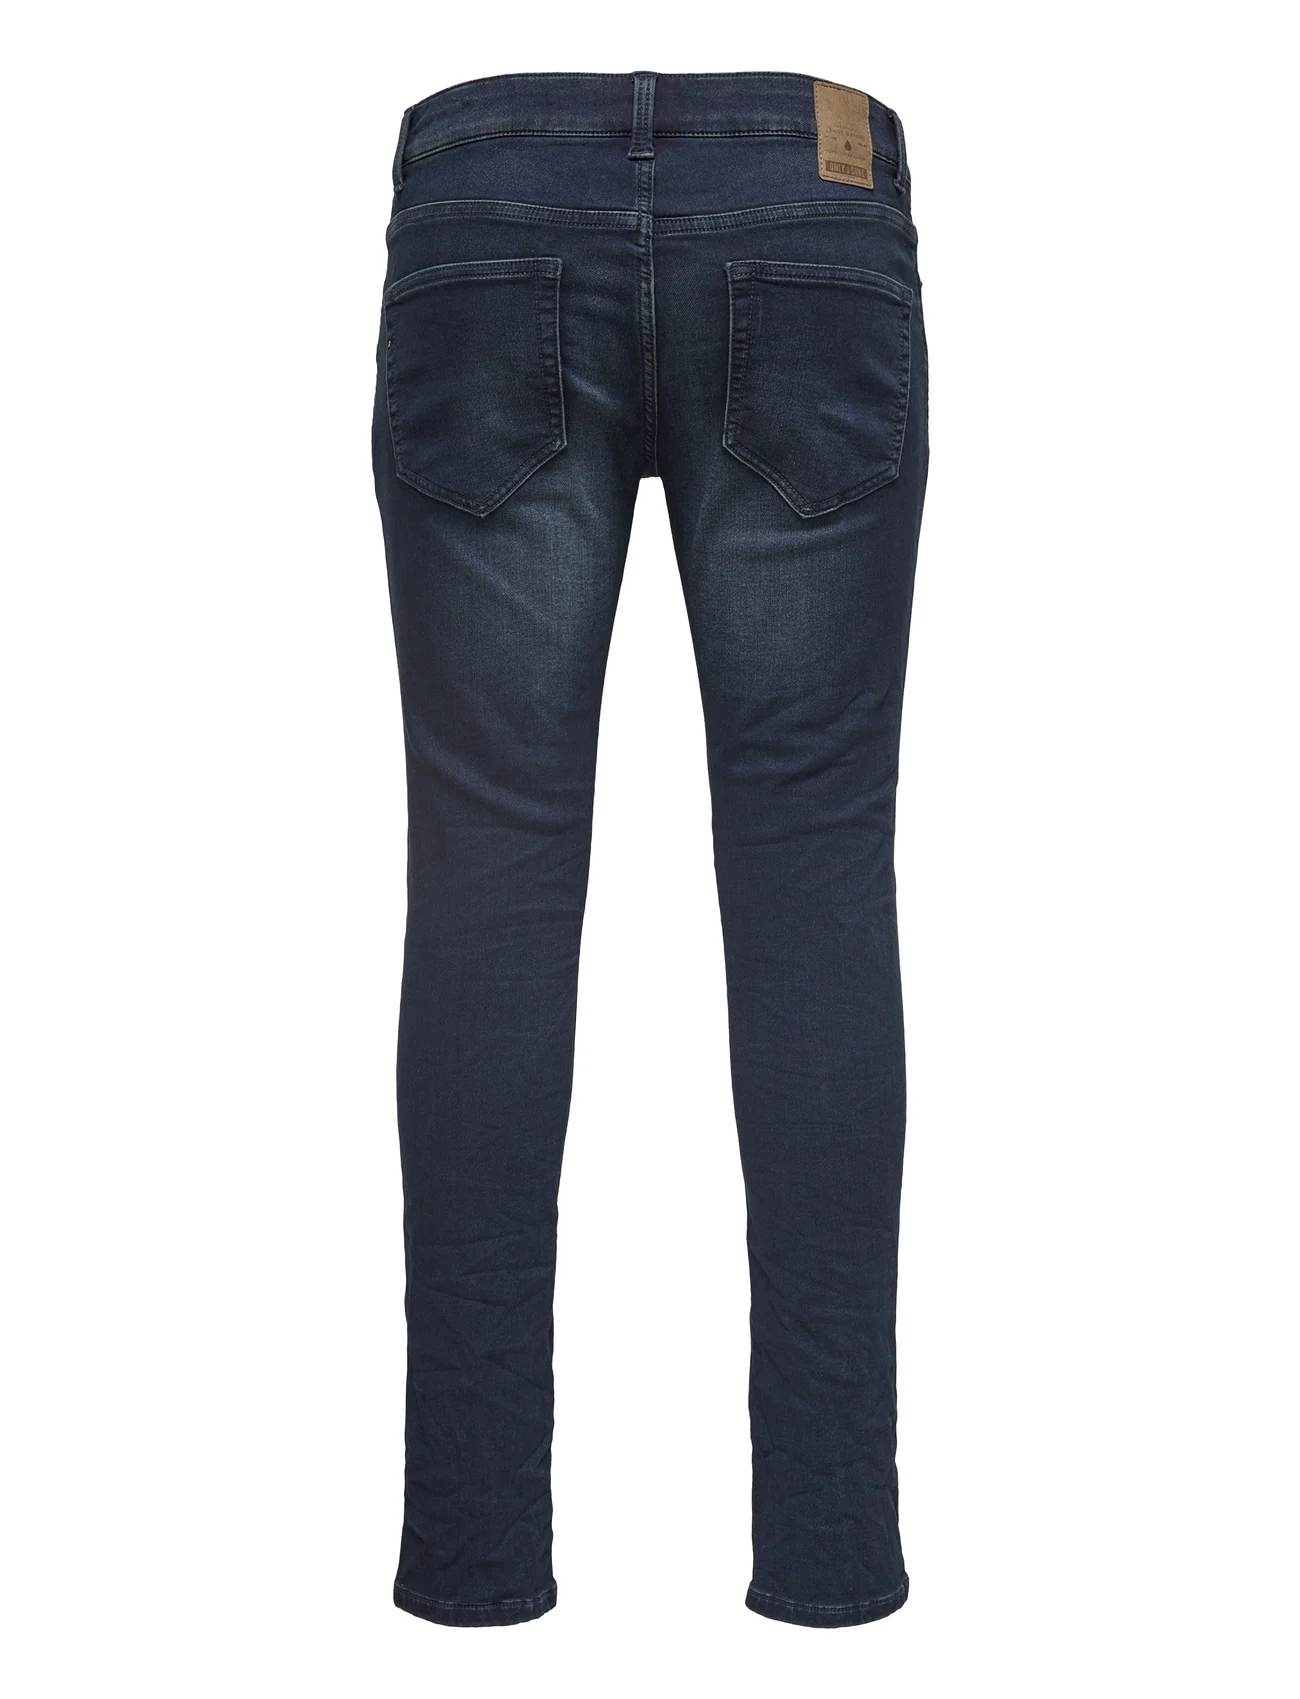 ONLY & SONS - ONSLOOM SLIM DB JOG 3631 PIM DNM NOOS - slim jeans - blue denim - 1